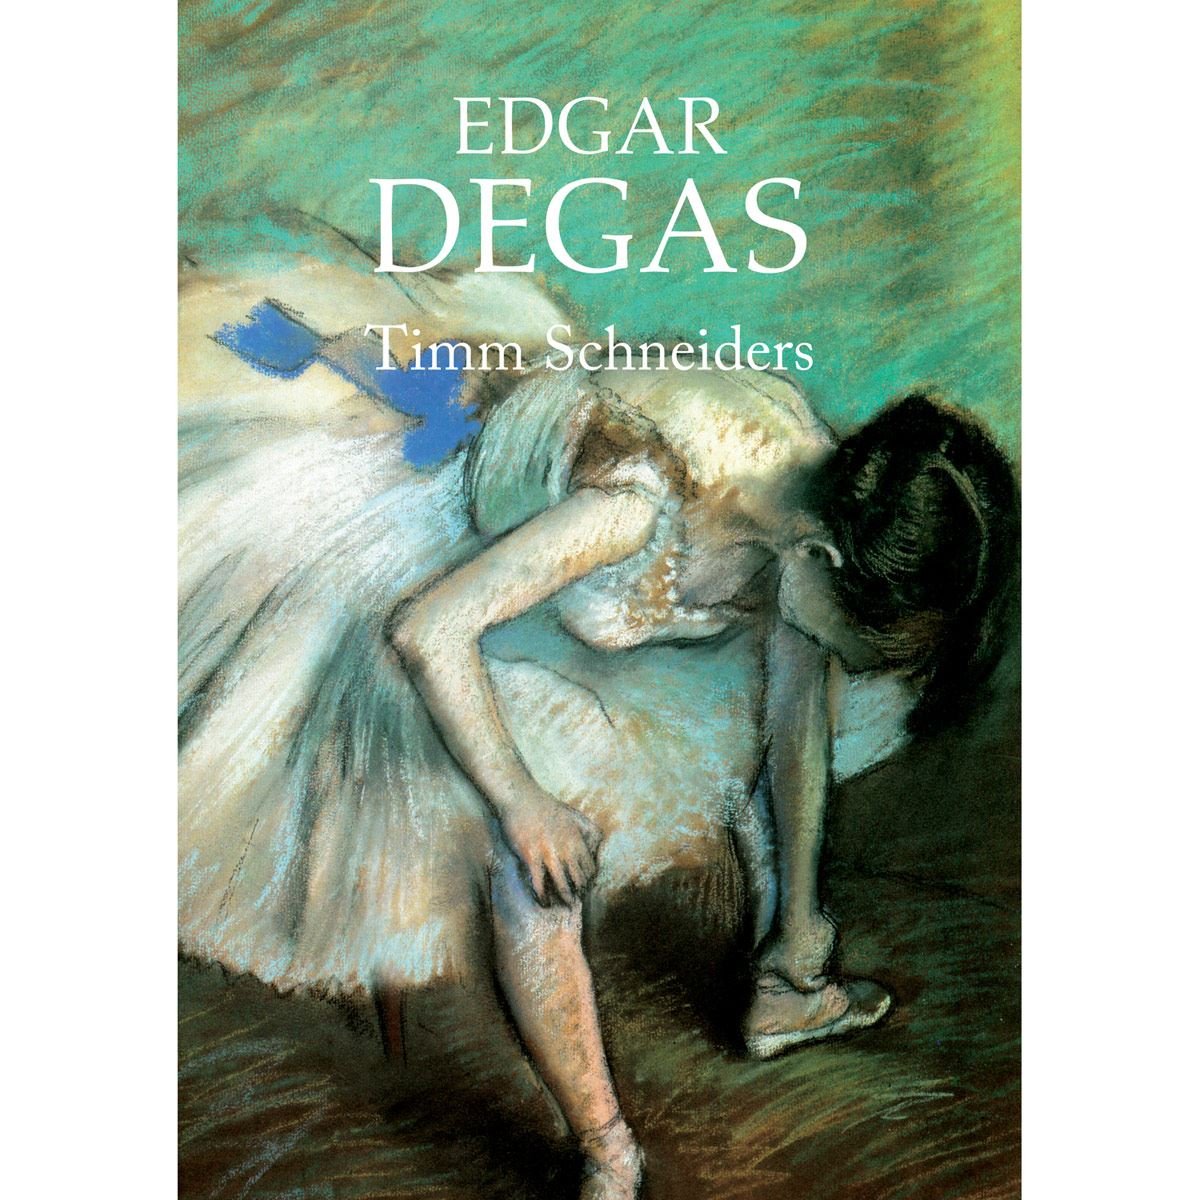 Edgar degas